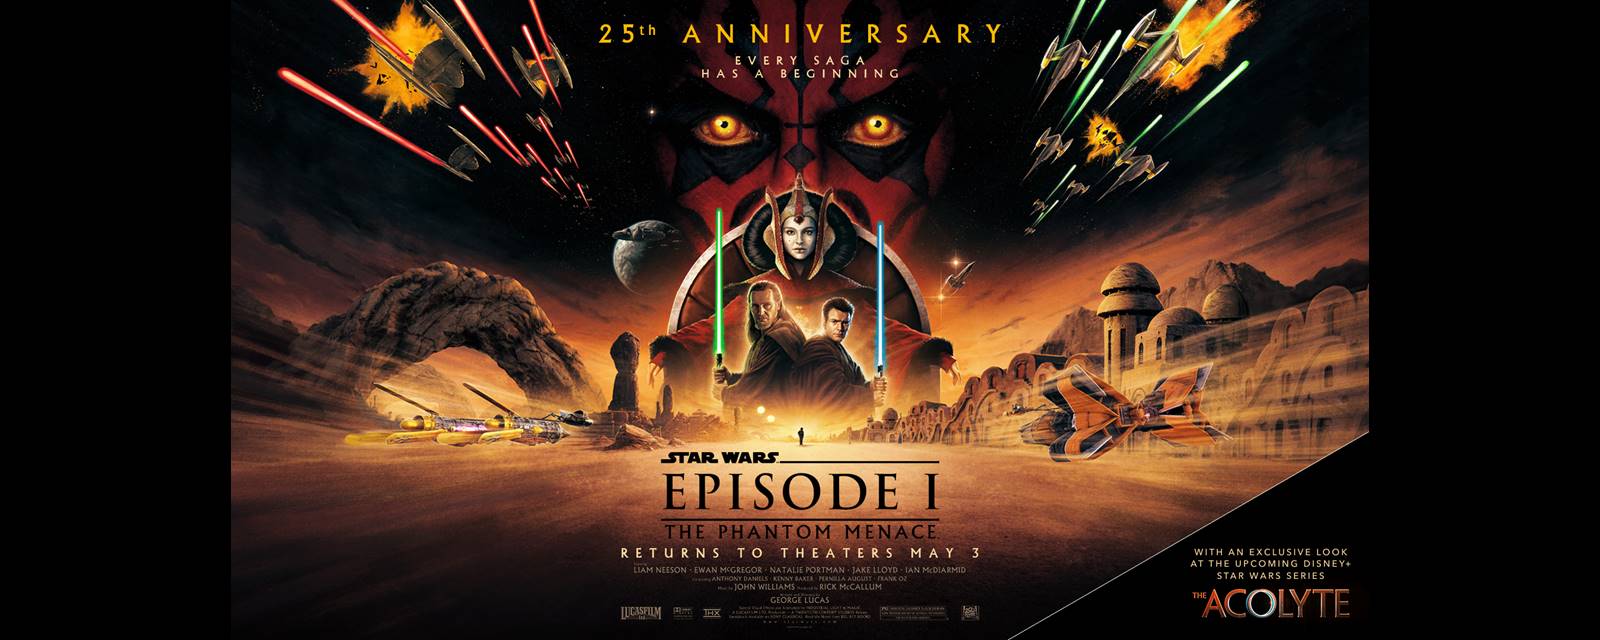 Star Wars Episode 1: The Phantom Menace 25th Anniversary